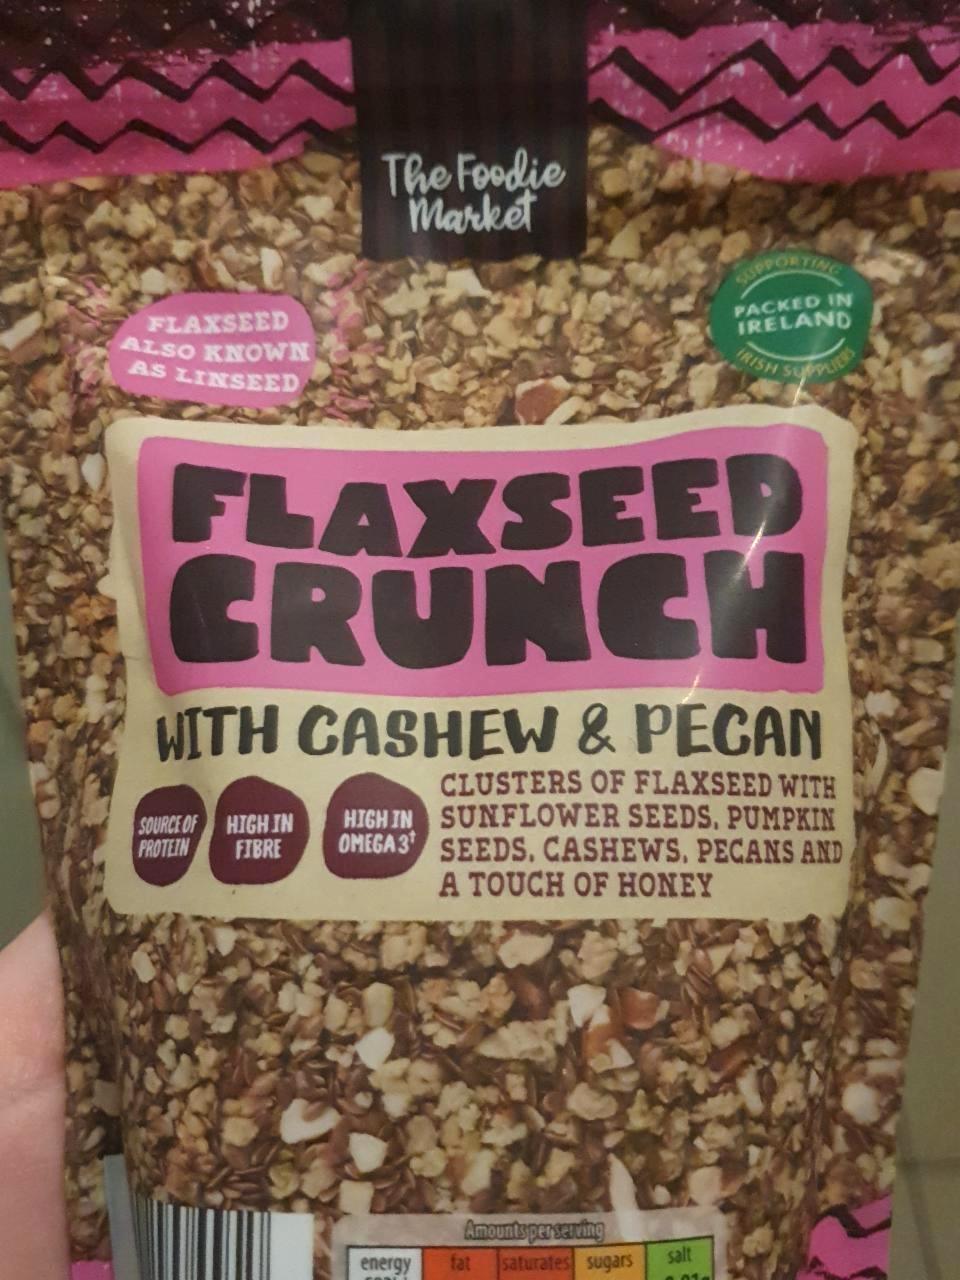 Képek - Flaxseed crunch The Foodie Market